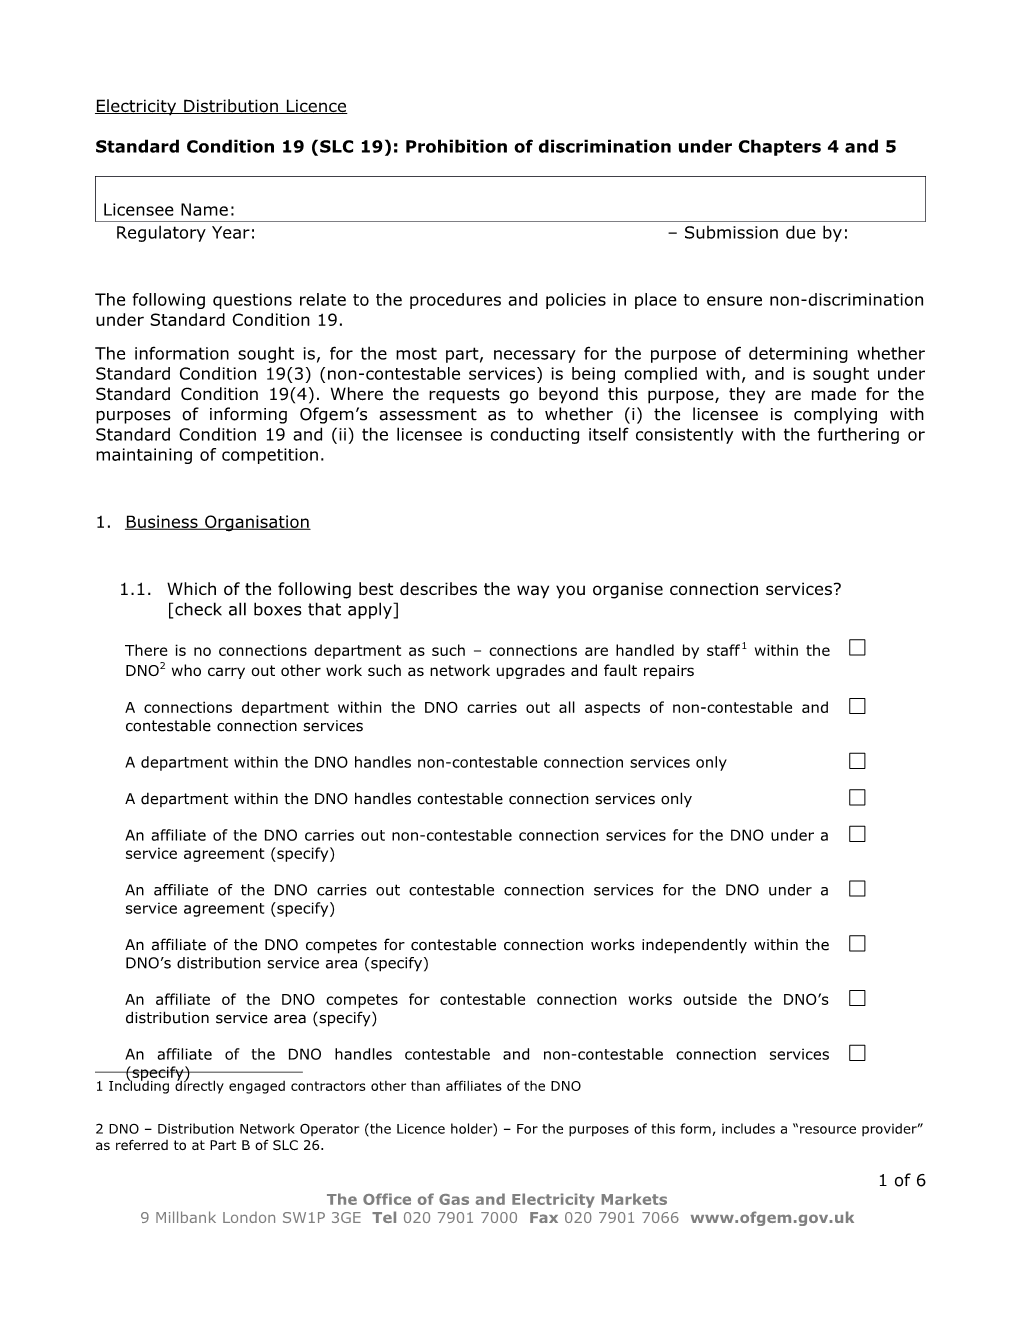 Standard Licence Condition 19 (SLC 19) Reporting Template 2009-10 (Non-Discrimination In